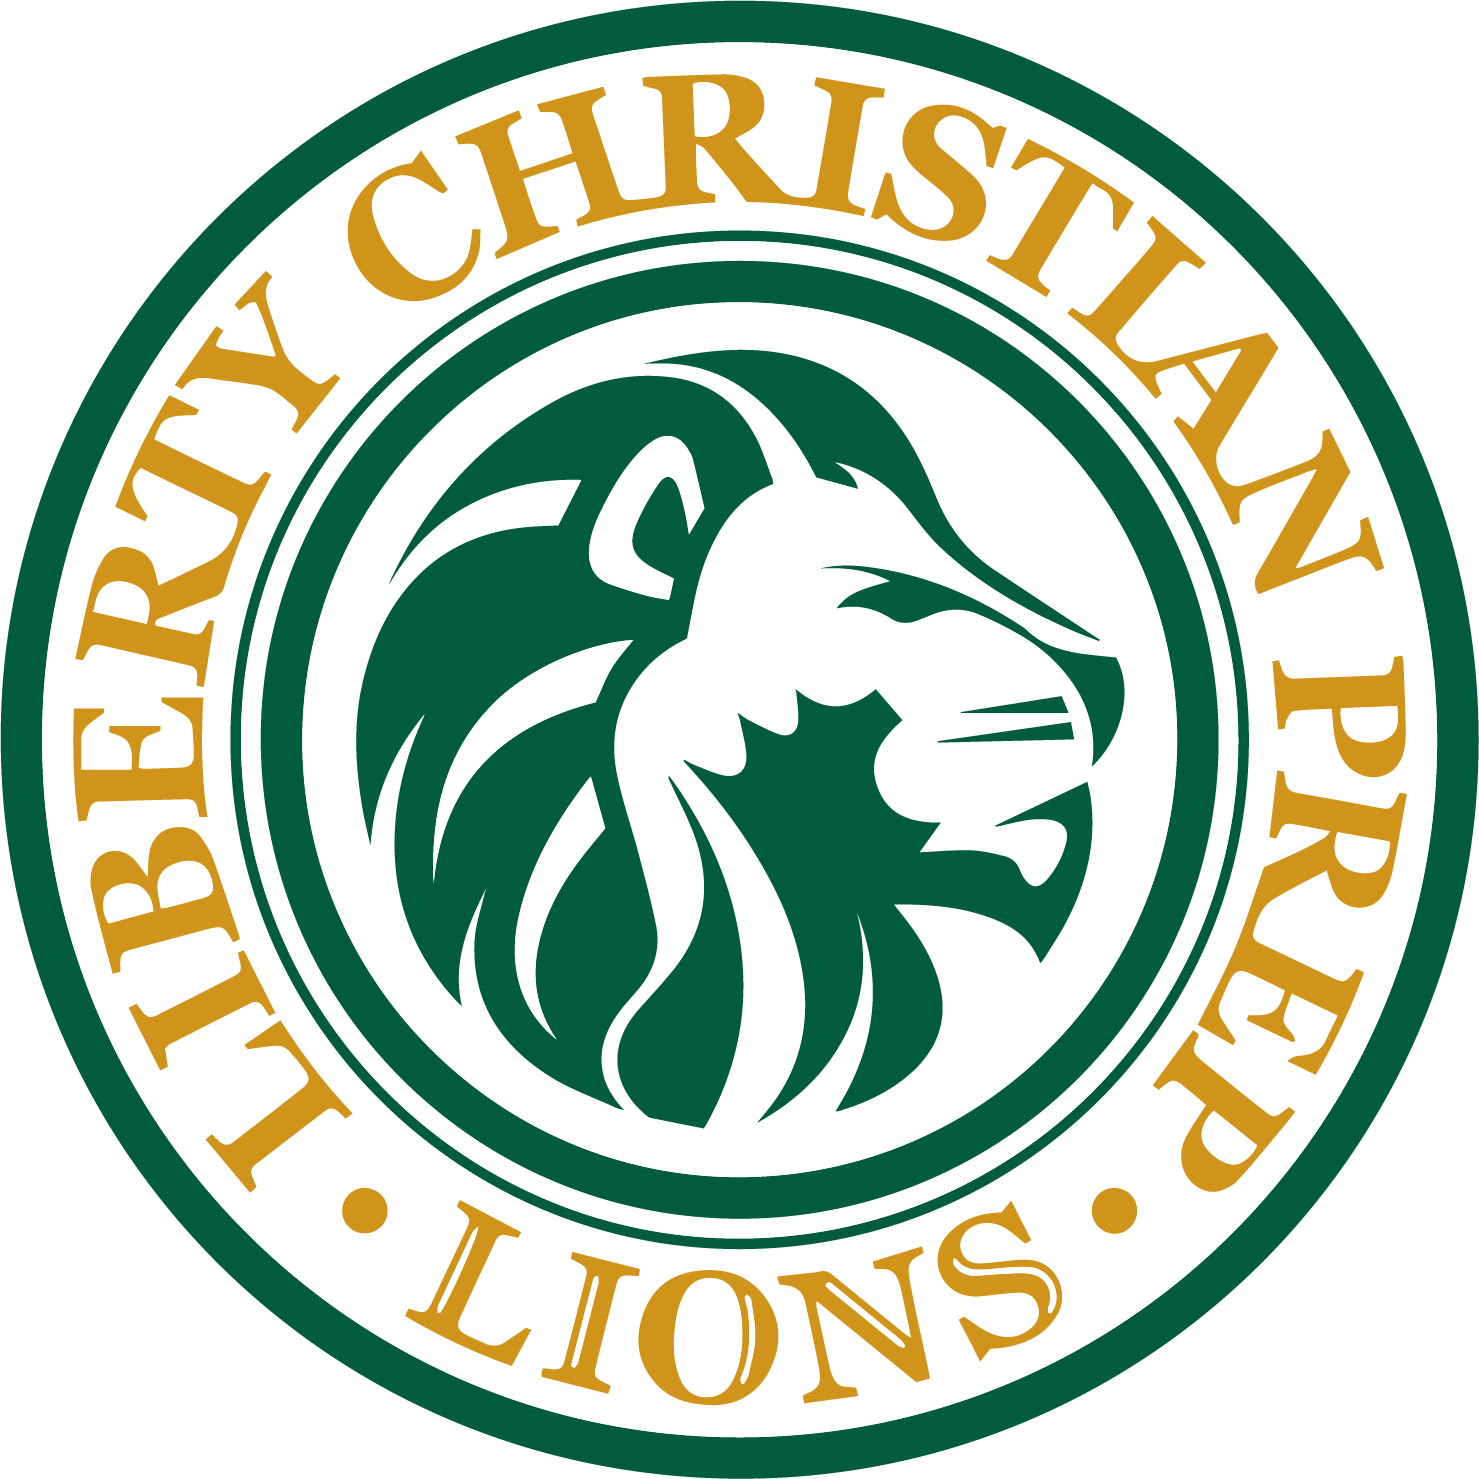 News Liberty Christian Preparatory School